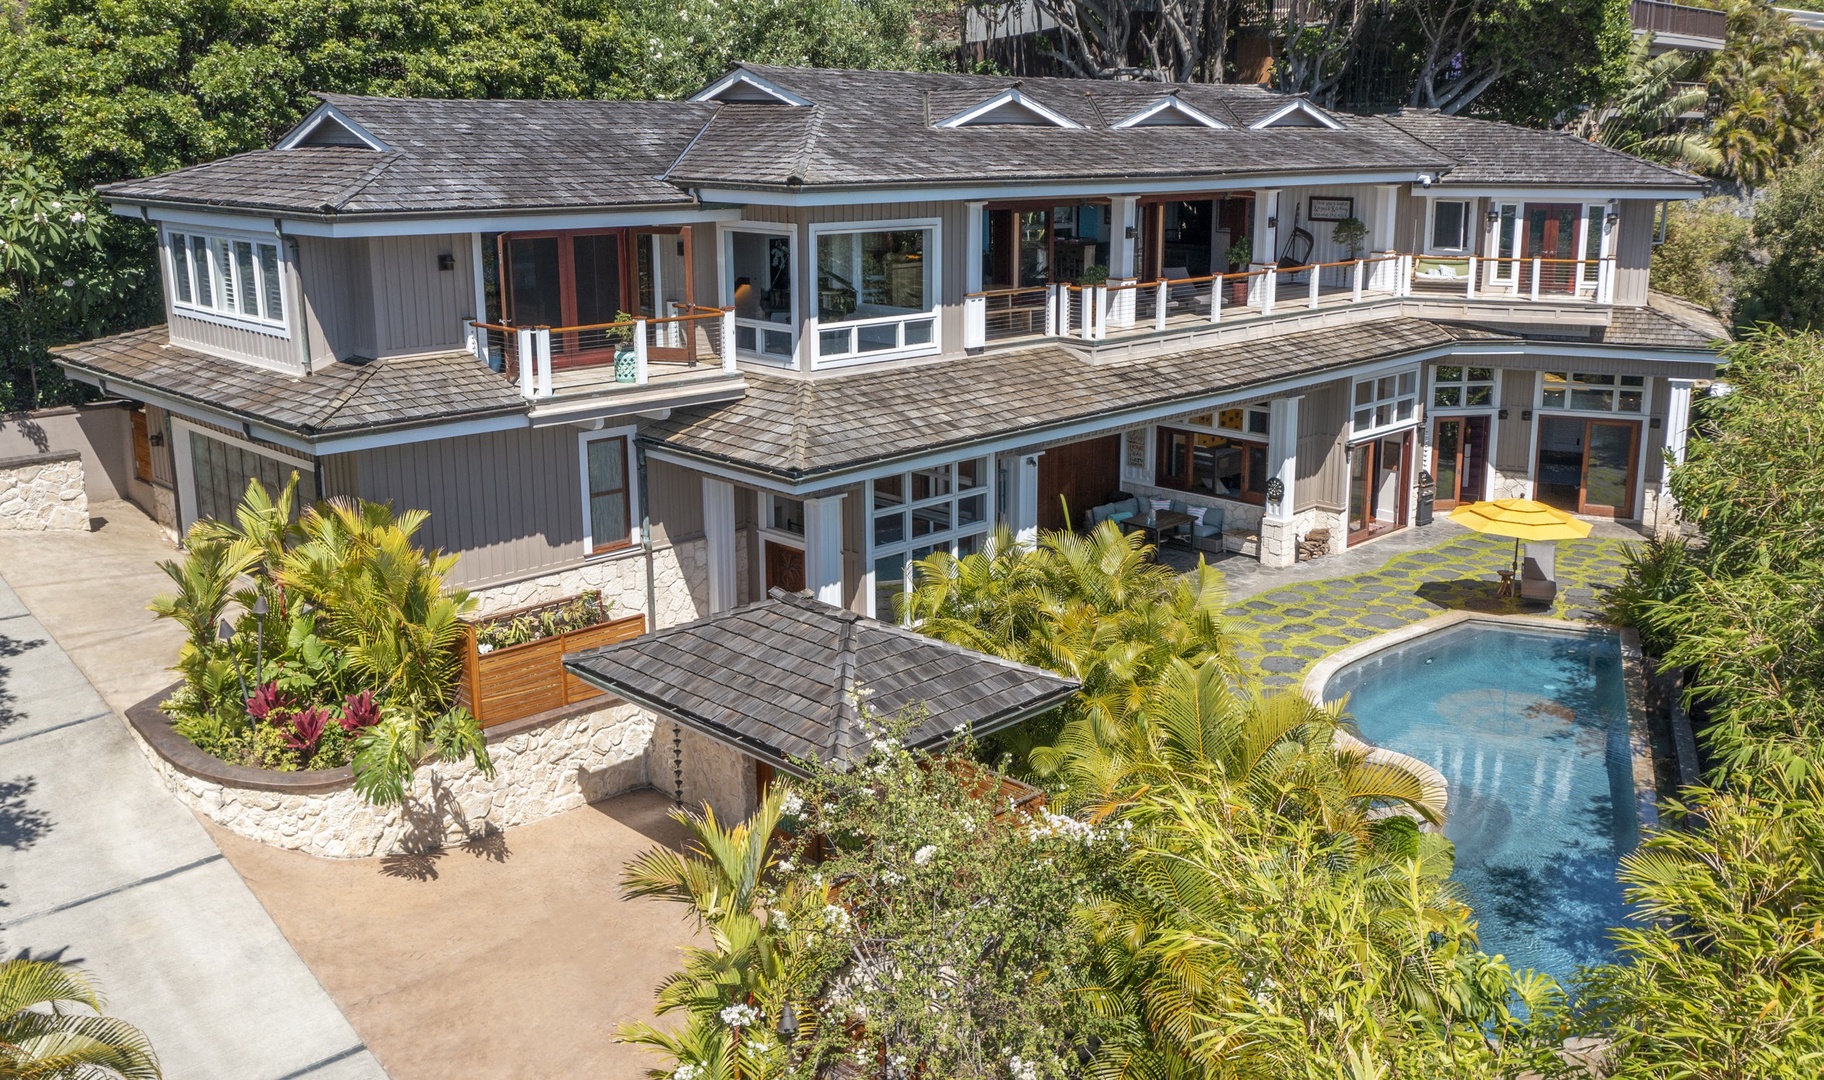 Kailua Vacation Rentals, Lanikai Villa** - Experience coastal luxury right here at Lanikai Villa